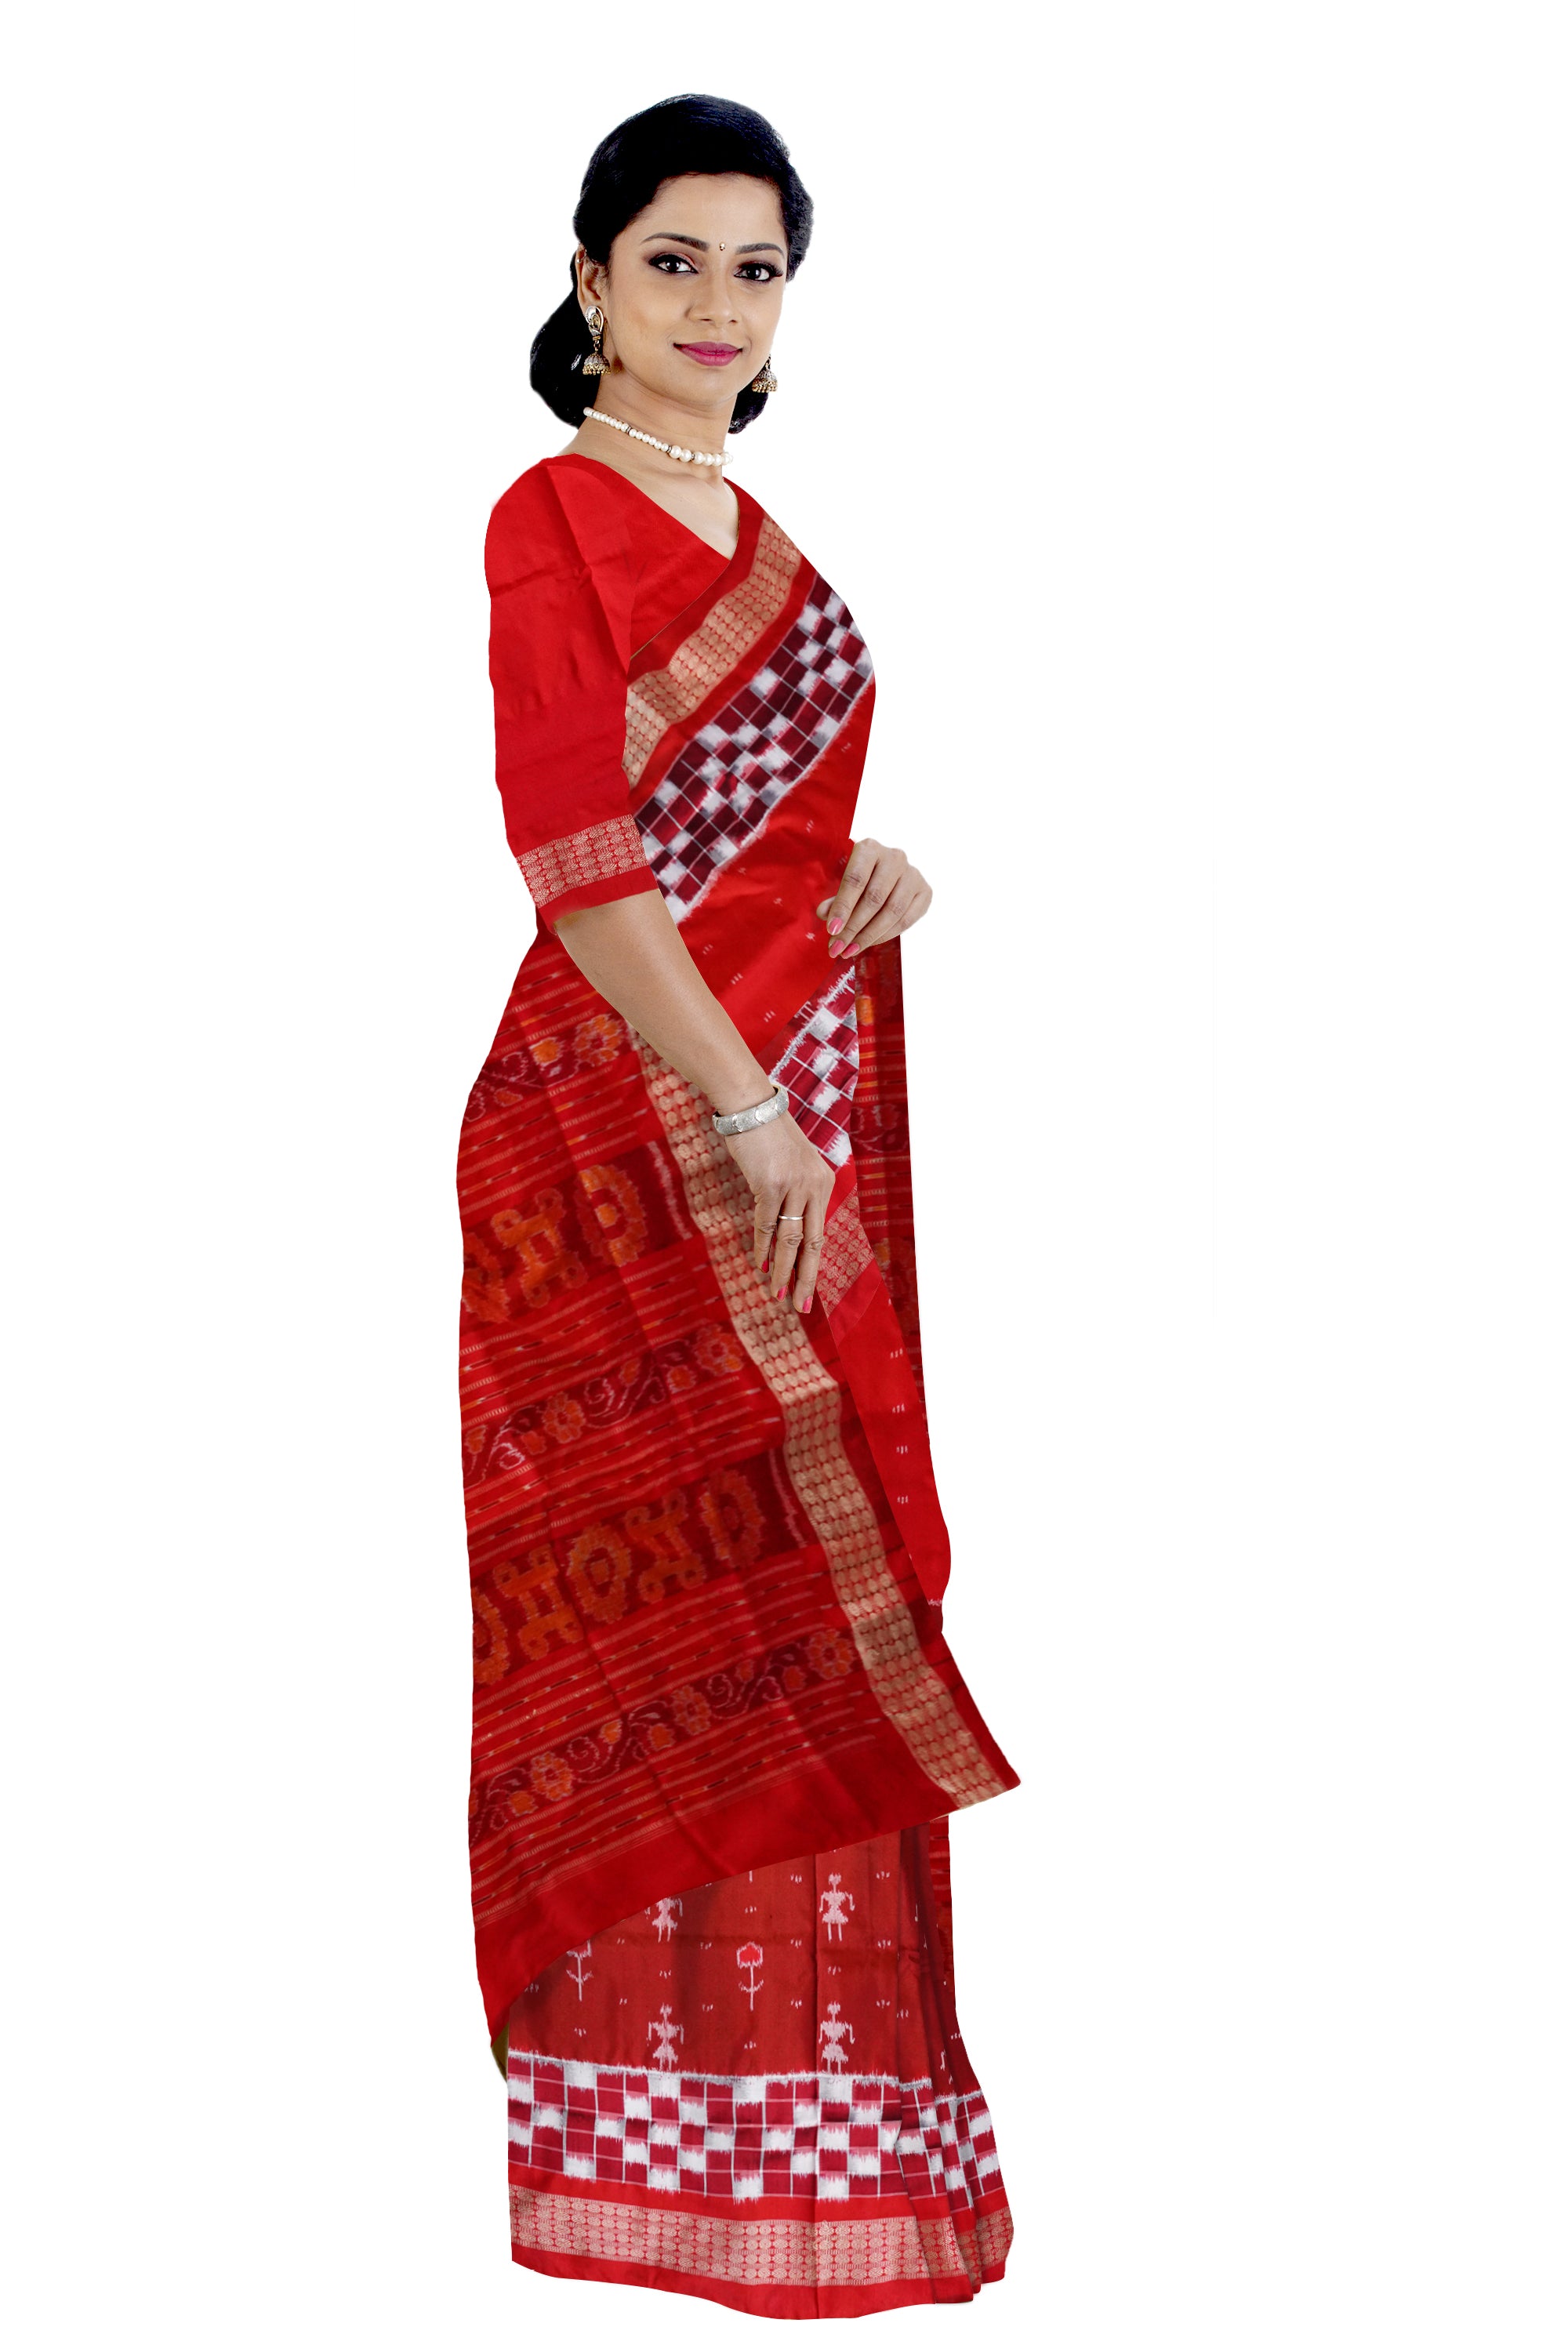 Terracotta Sambalpuri handloom pata saree in red color with Pasapali  border, cultural finesse showcased gracefully. - Koshali Arts & Crafts Enterprise